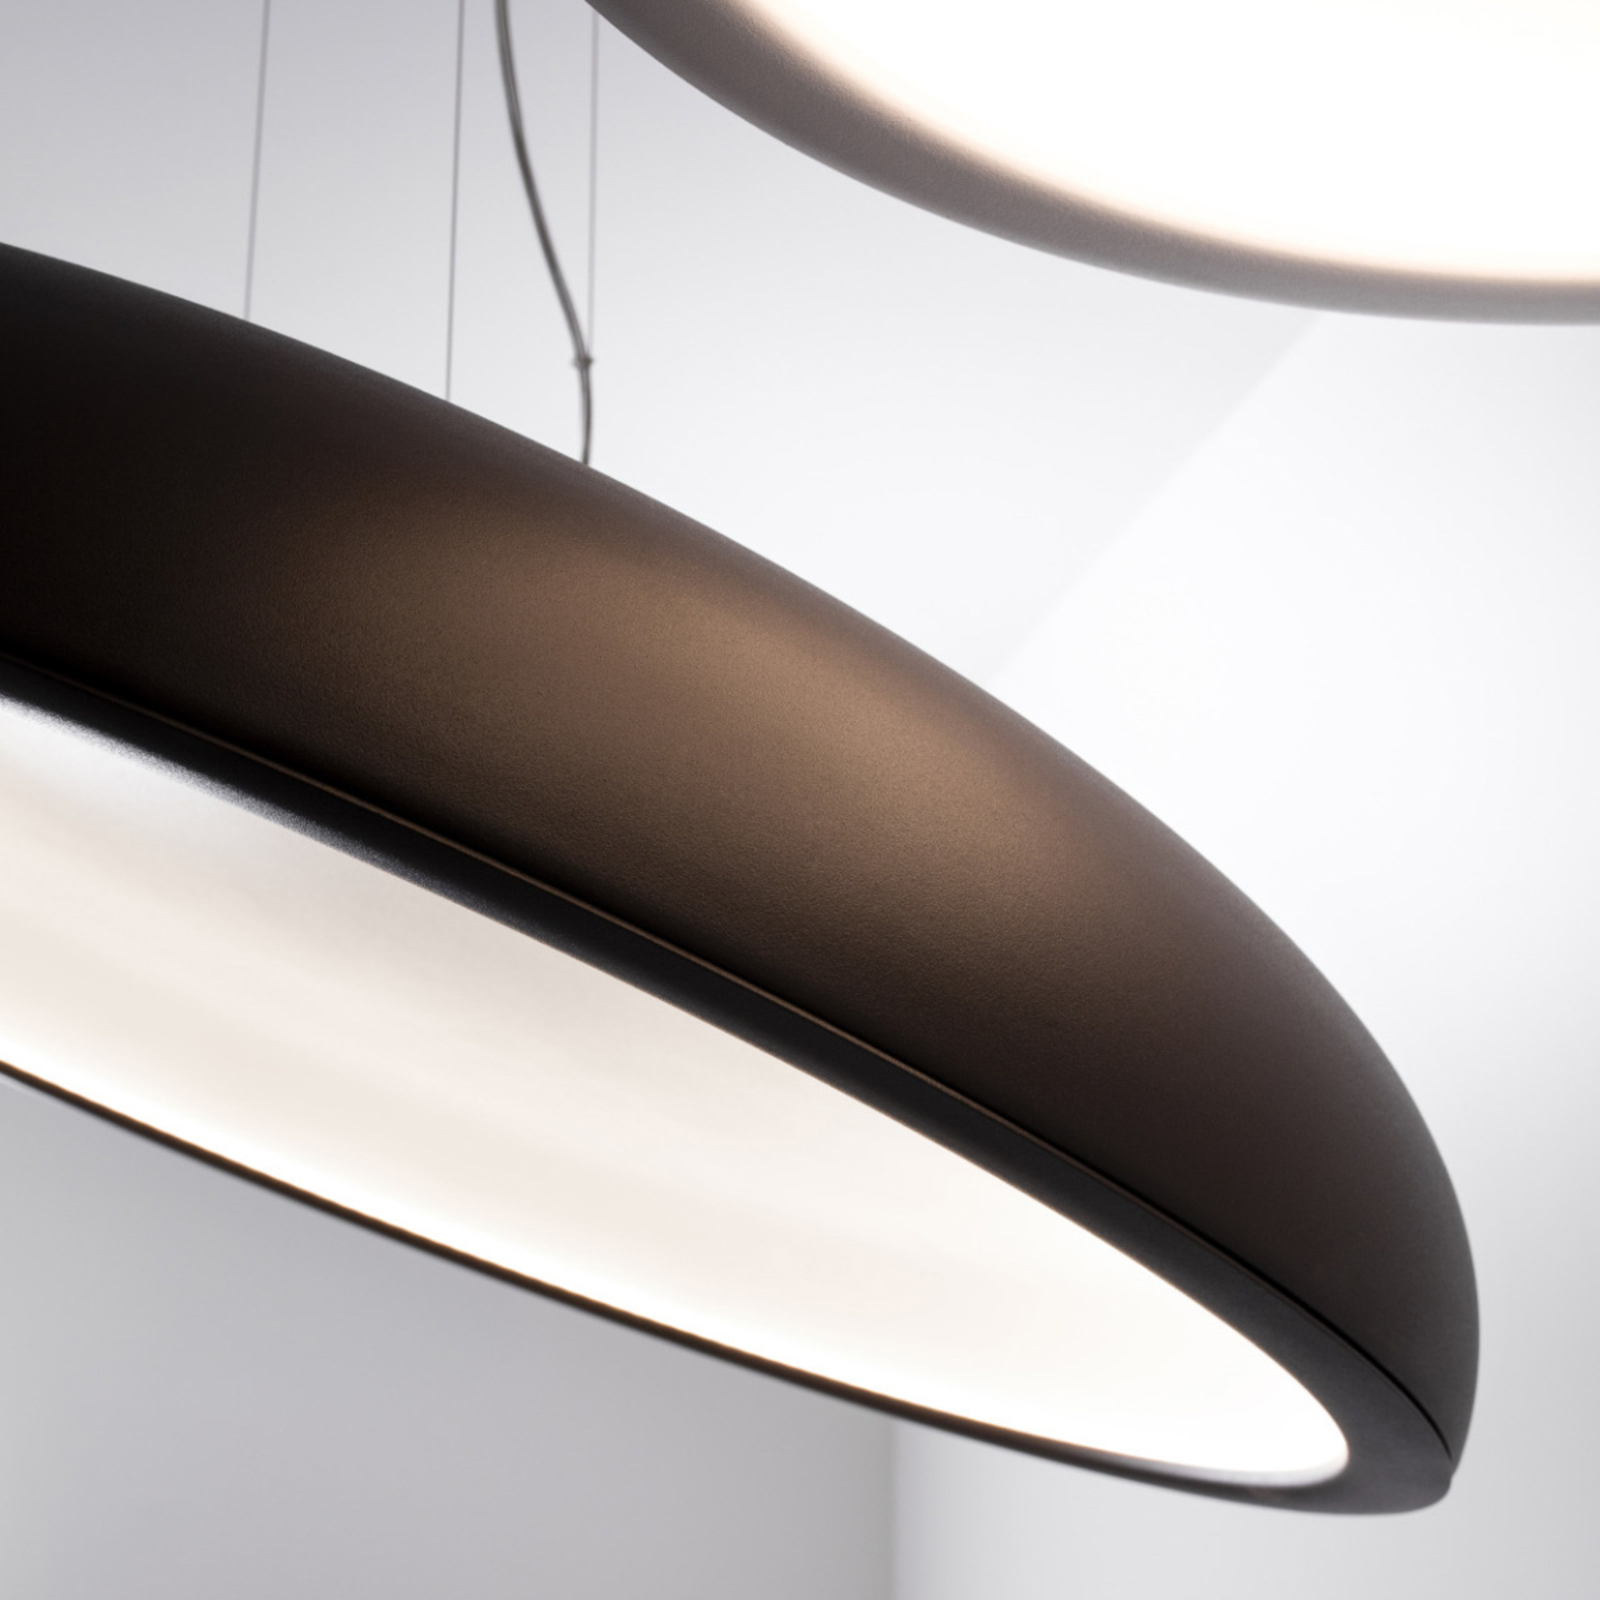 Závěsné svítidlo Stilnovo Reflexio LED, Ø46 cm, černá barva